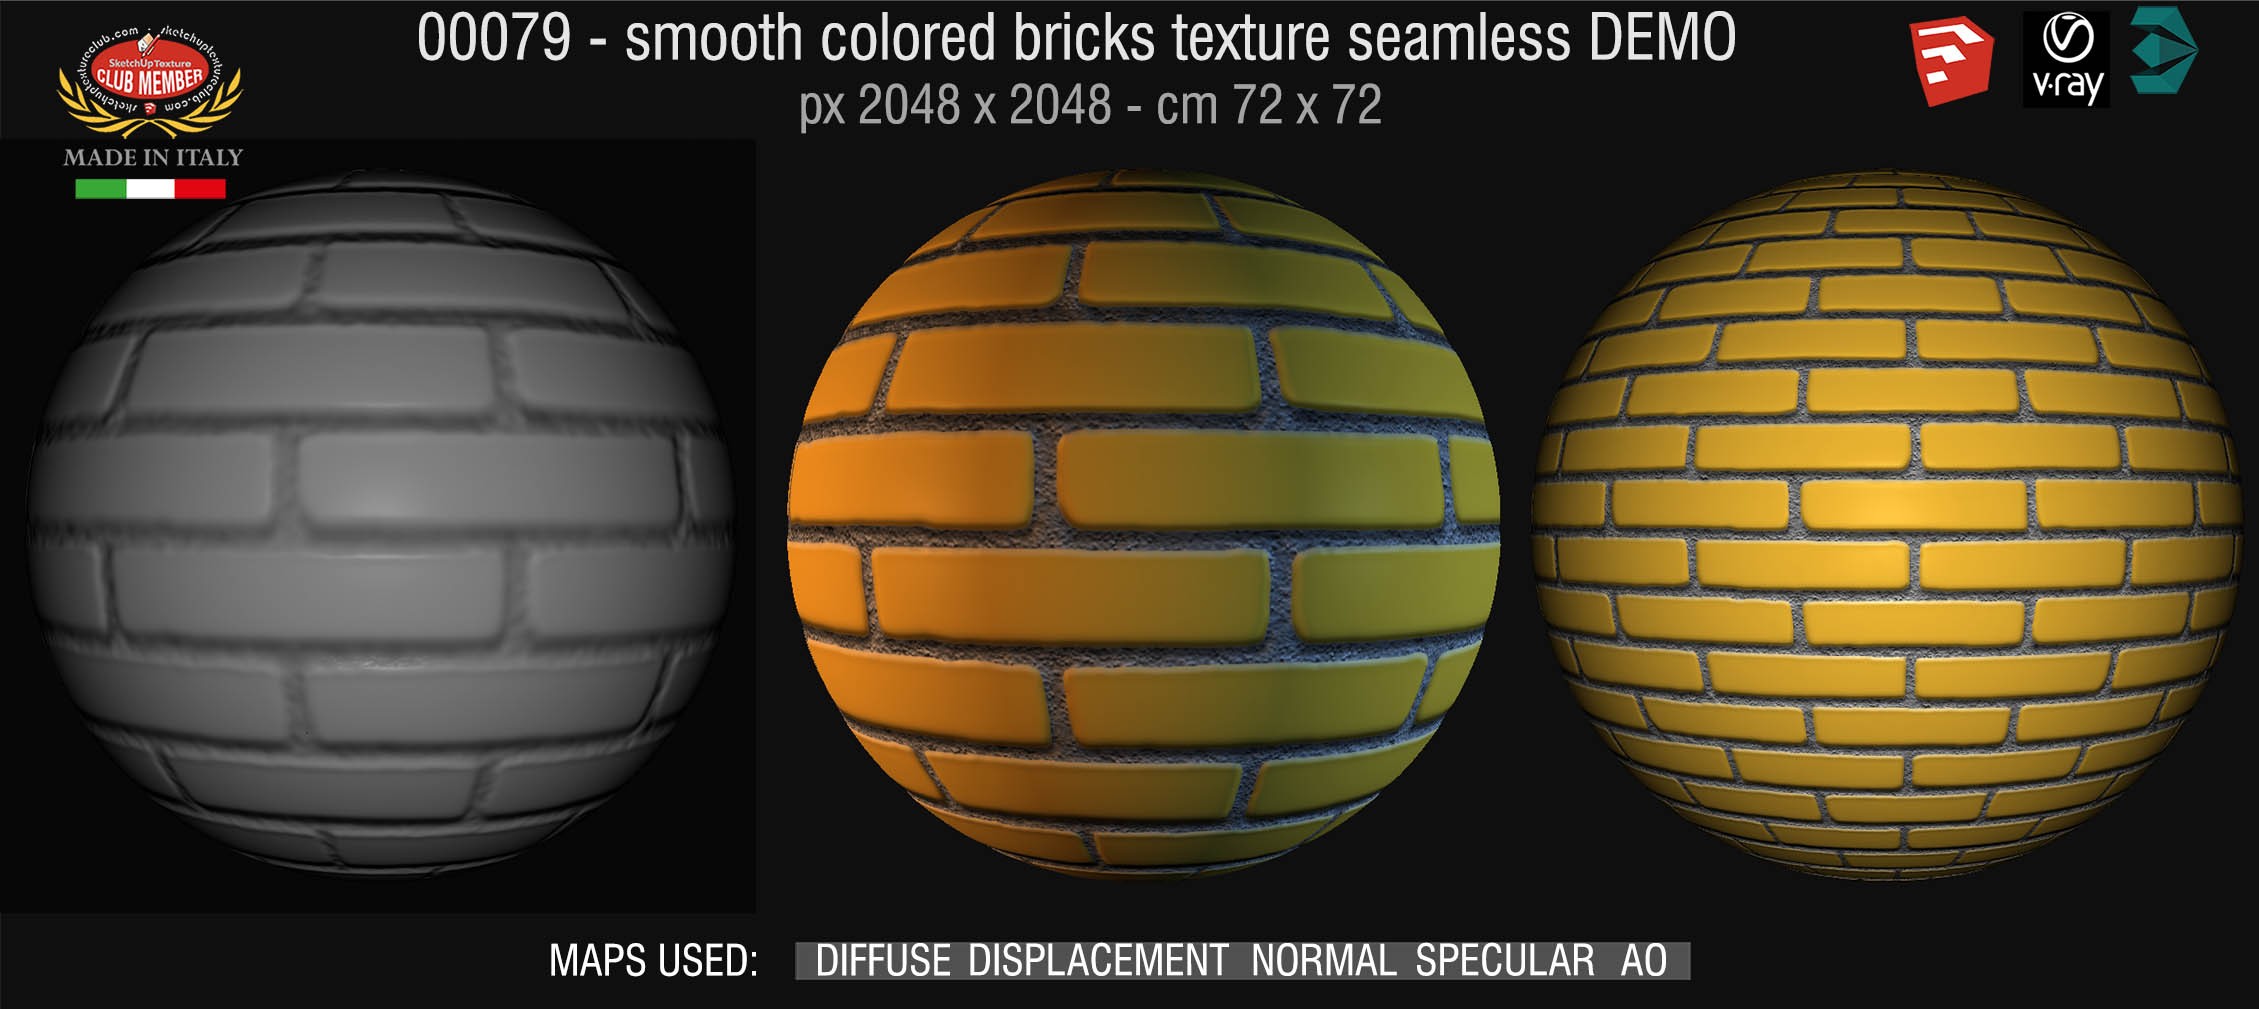 00079 smooth colored bricks texture seamless + maps DEMO